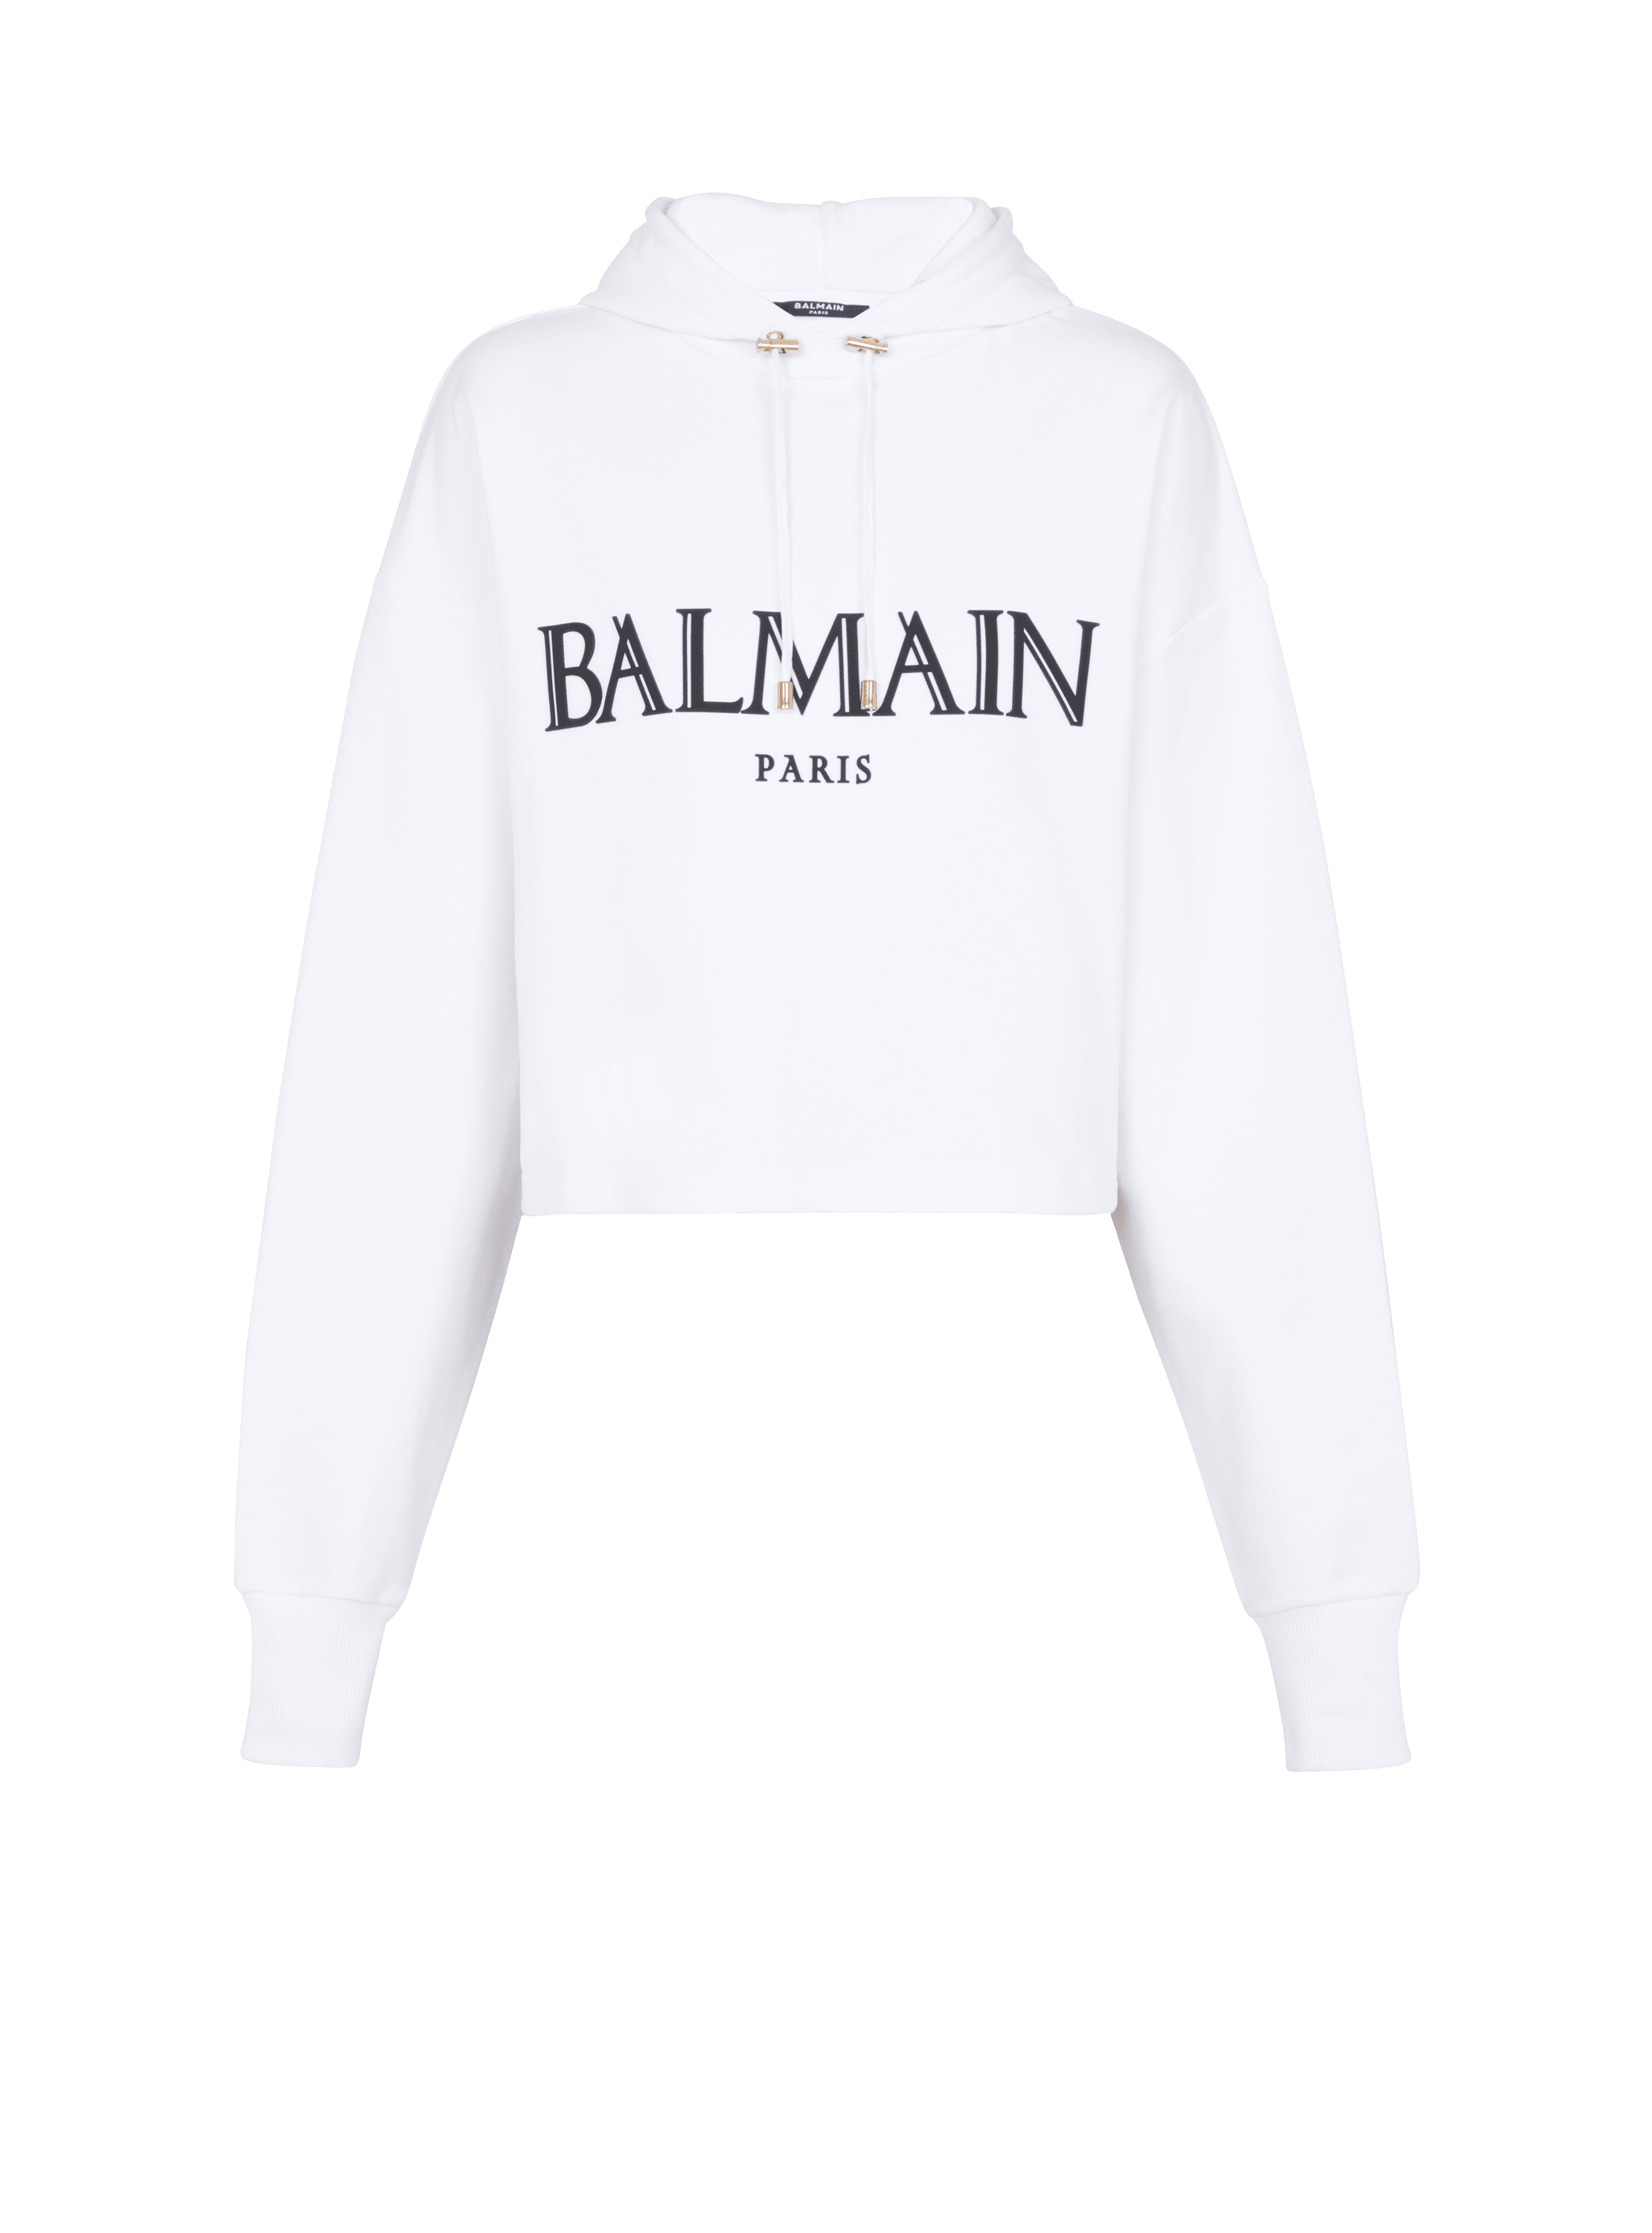 Kurzes Kapuzensweatshirt mit römischem Balmain-Logo aus Kautschuk